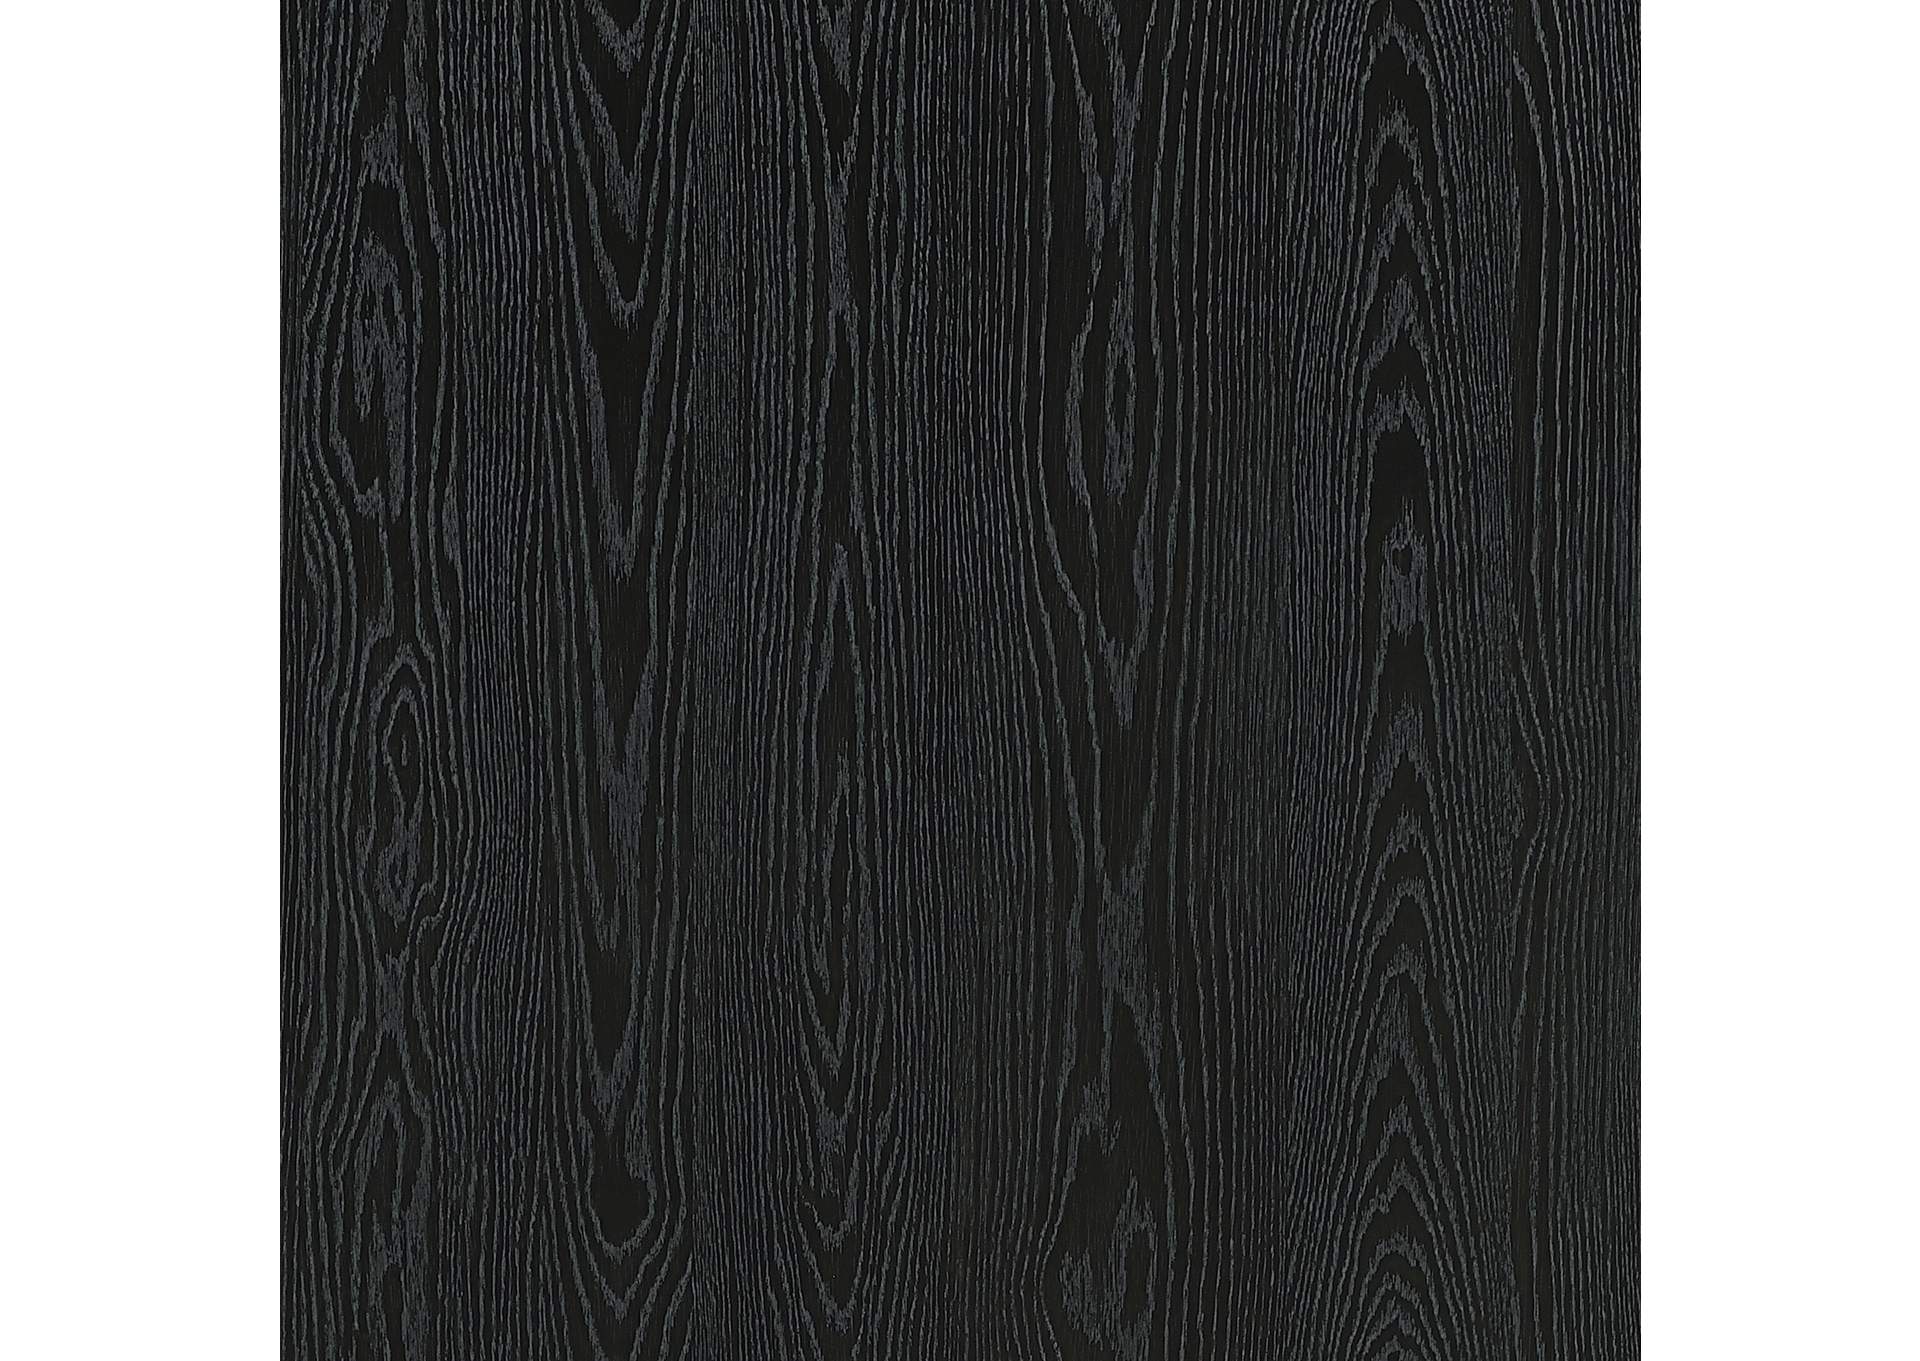 Rodez 3-piece Occasional Table Set Black Oak,Coaster Furniture